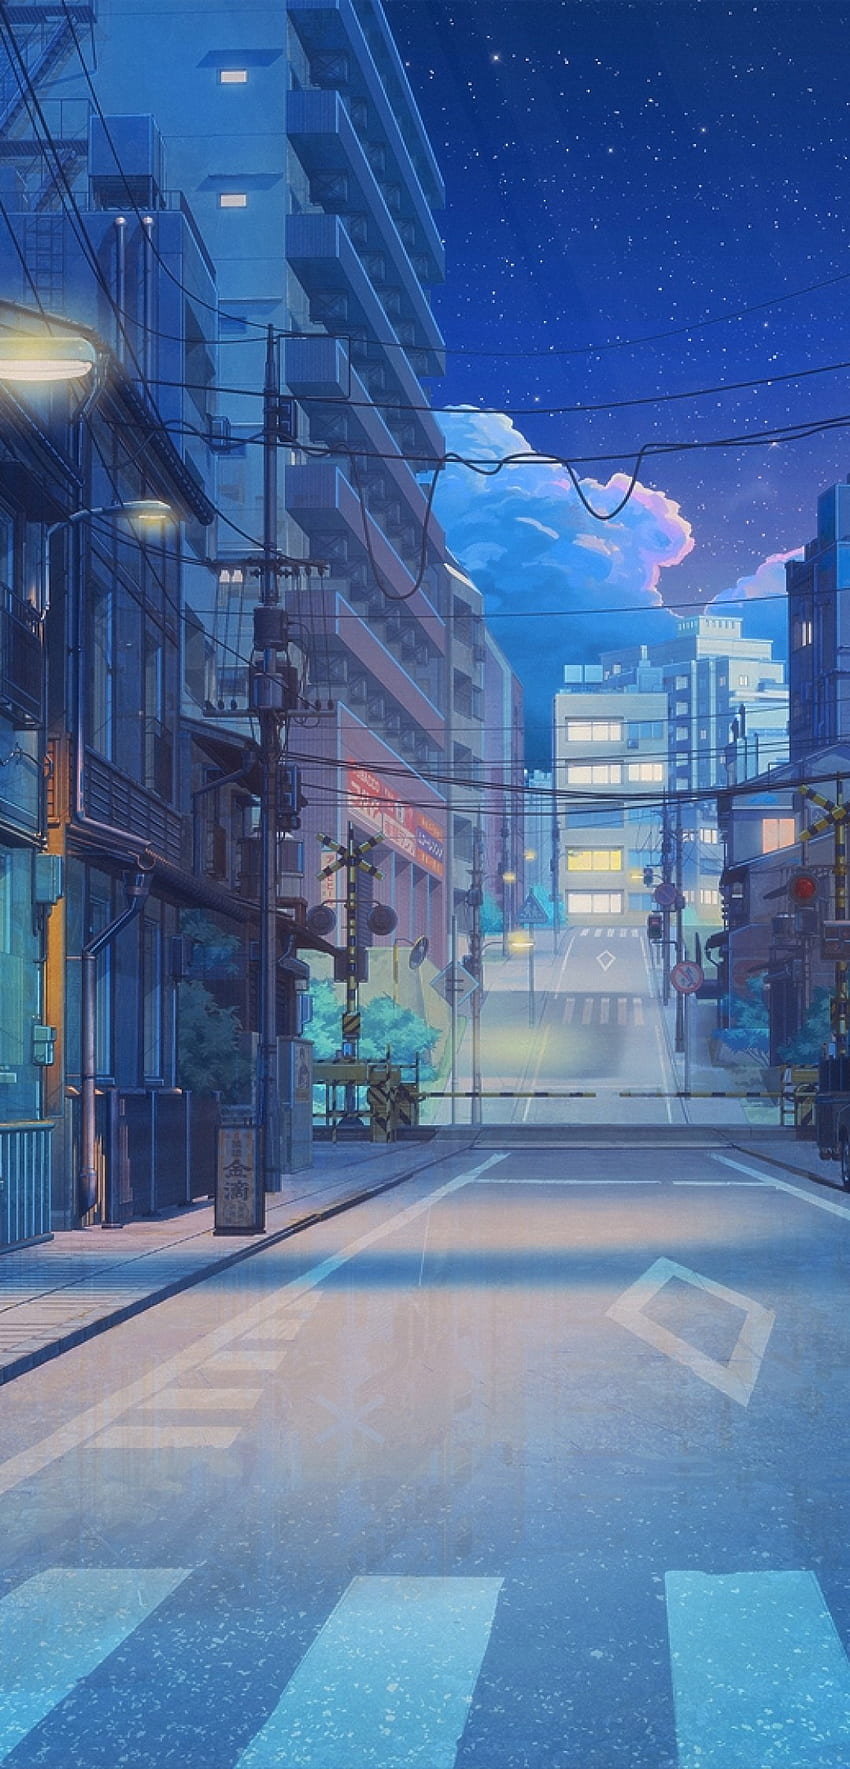 Anime Street, Road, Buildings, Scenes, Night, Stars untuk Xiaomi Mi 8 Pro, Anime Street Night wallpaper ponsel HD